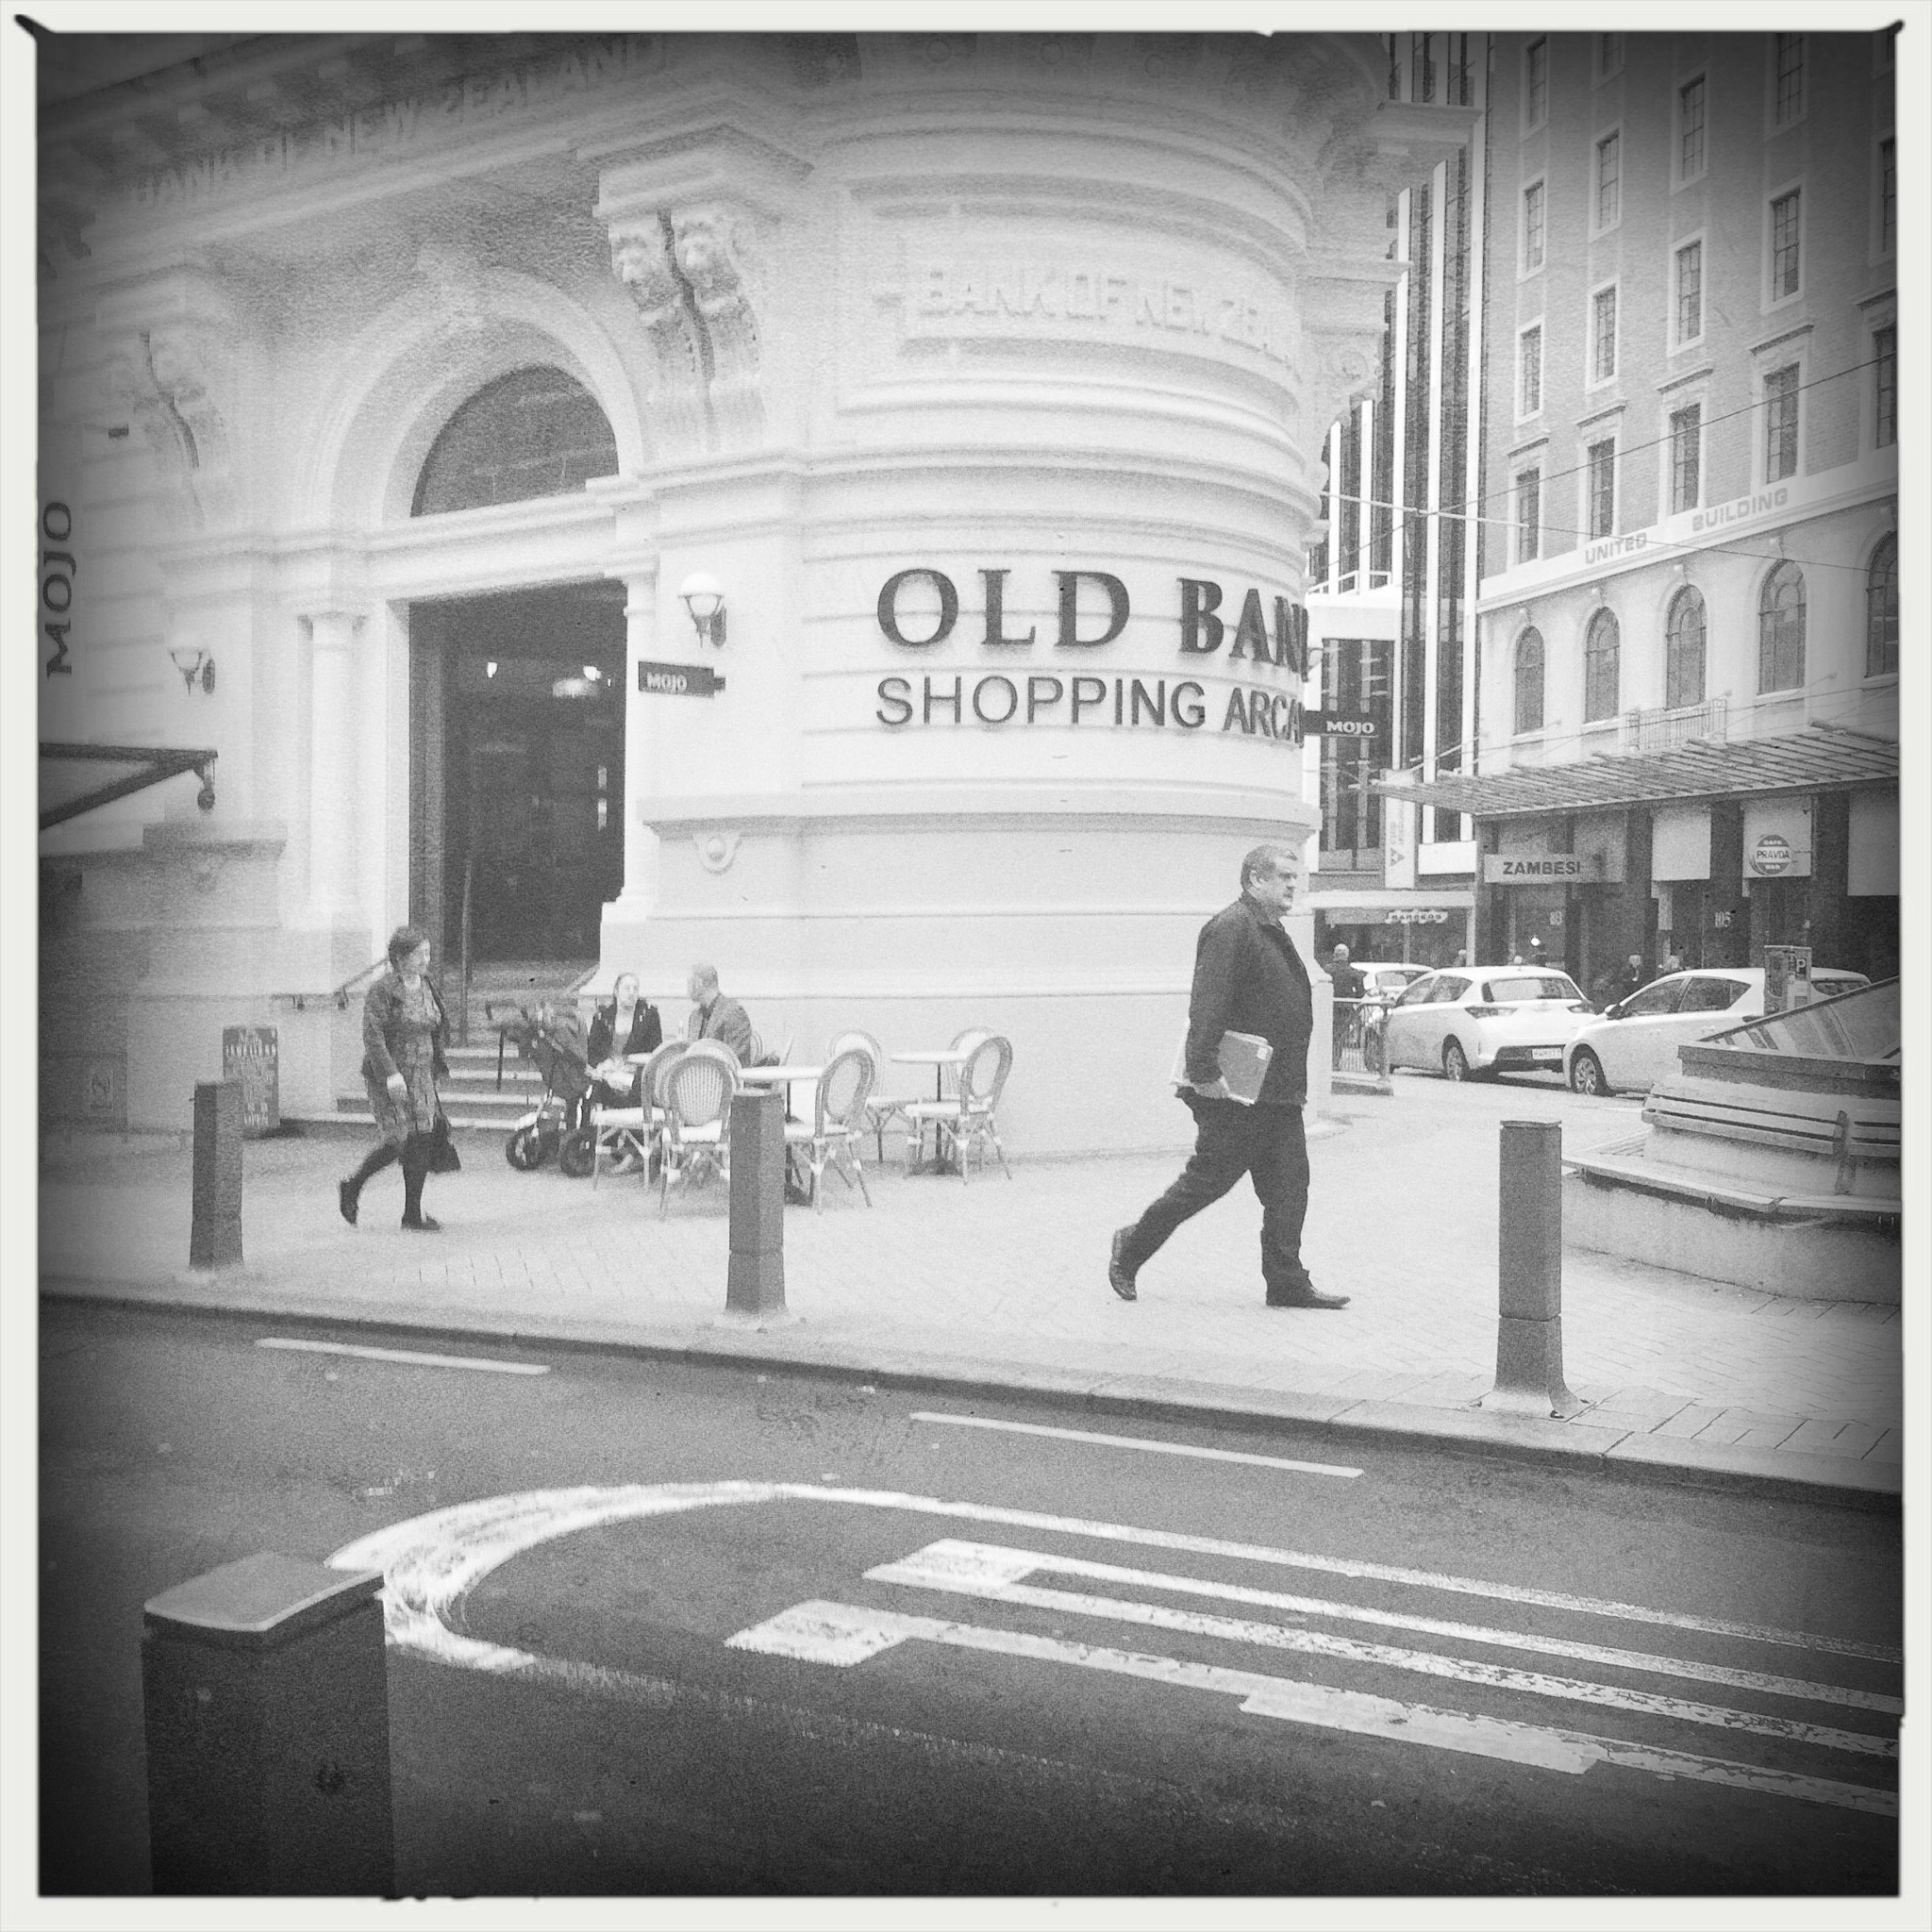 Old Bank Arcade